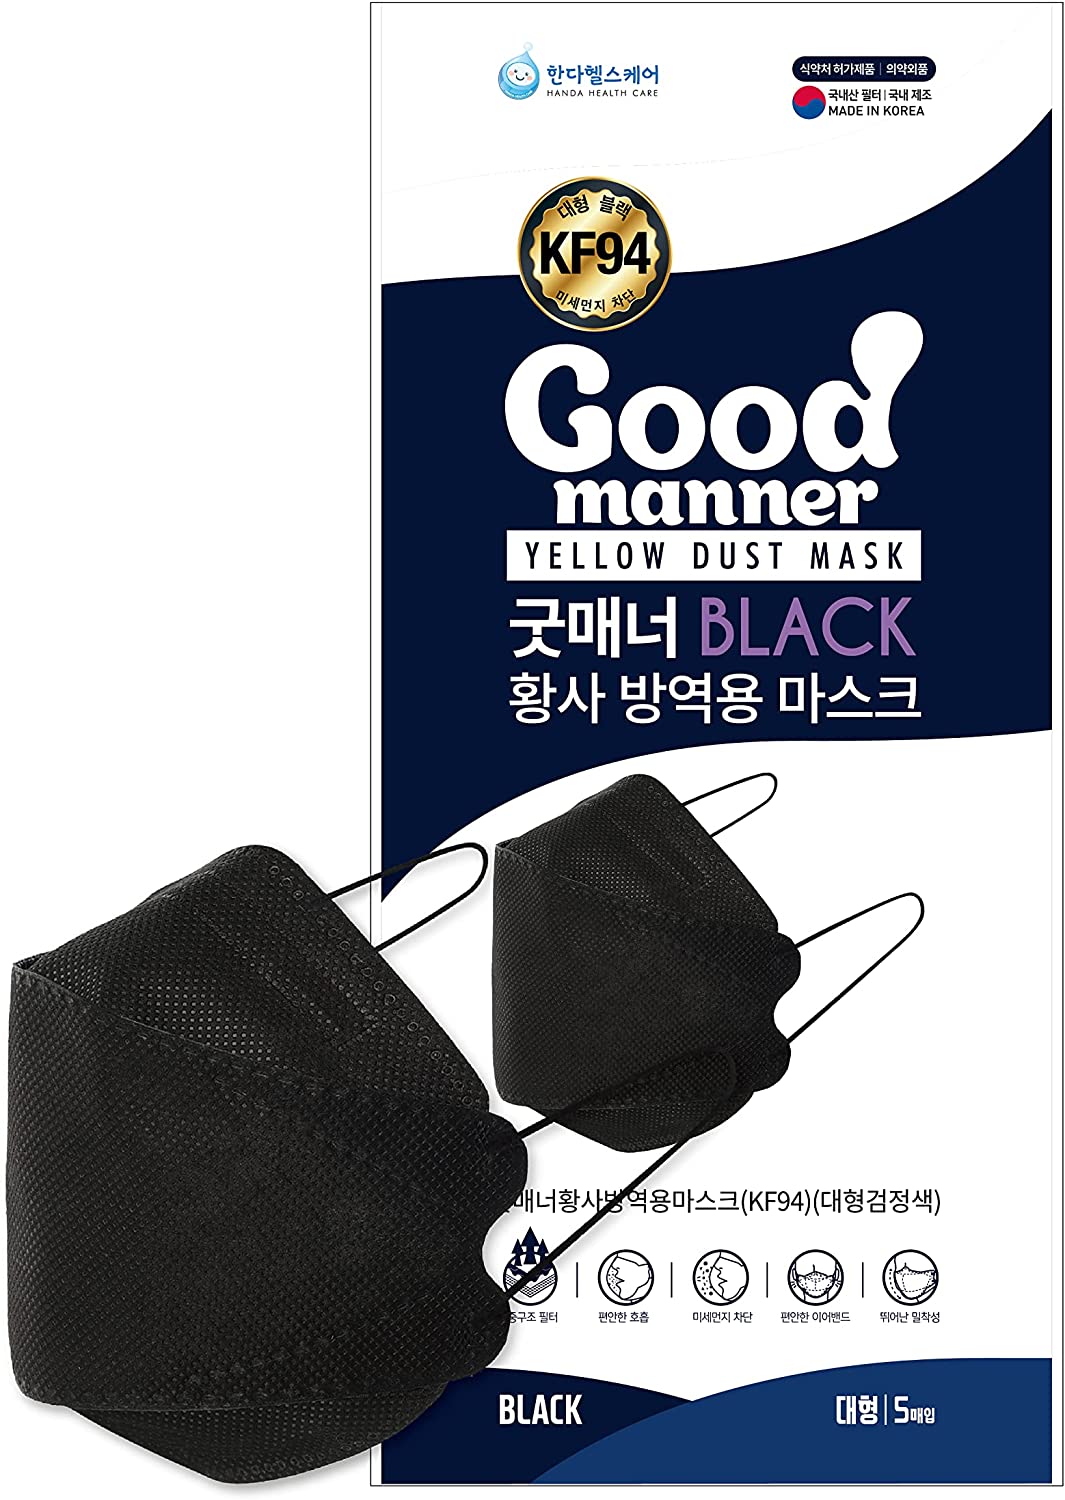 Good Manner Premium KF94 Disposable Face Masks (Pack of 5) - BLACK